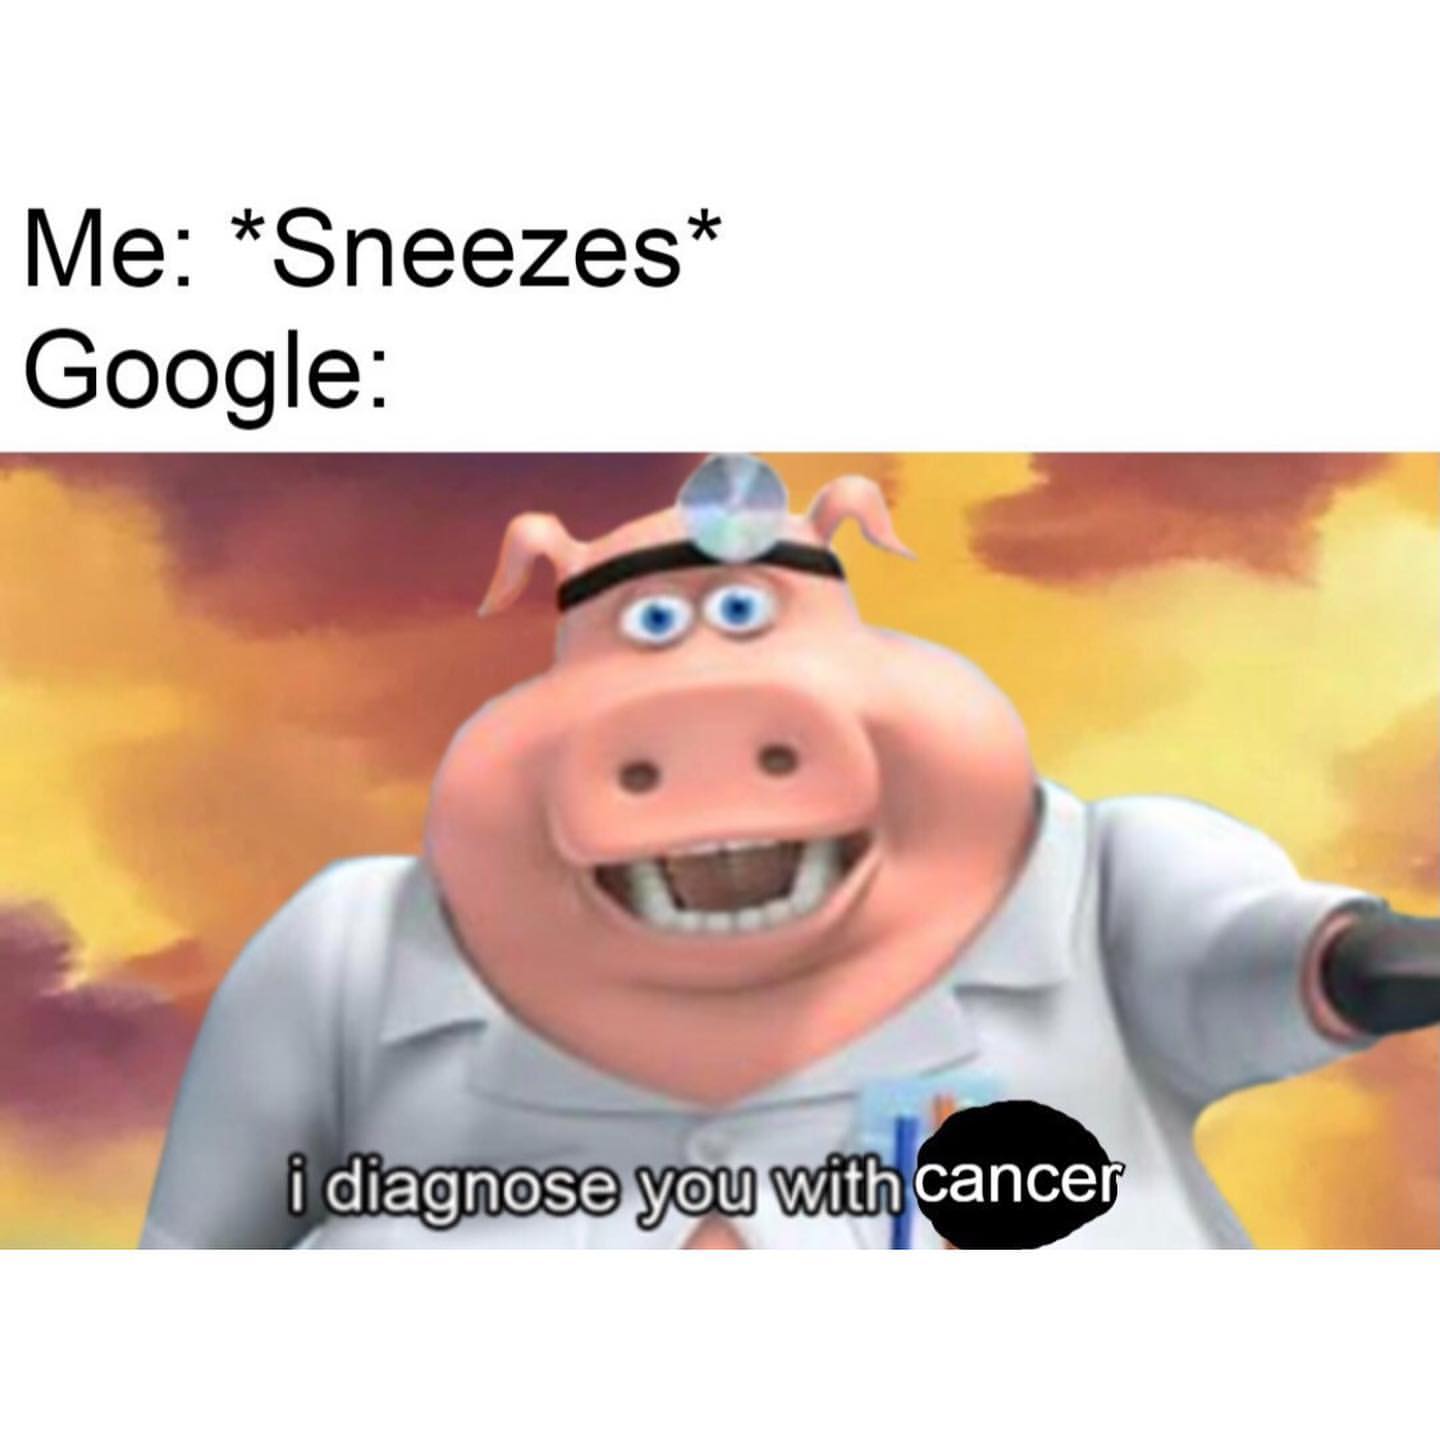 Me: Sneezes. Google: I diagnose you with cancer.